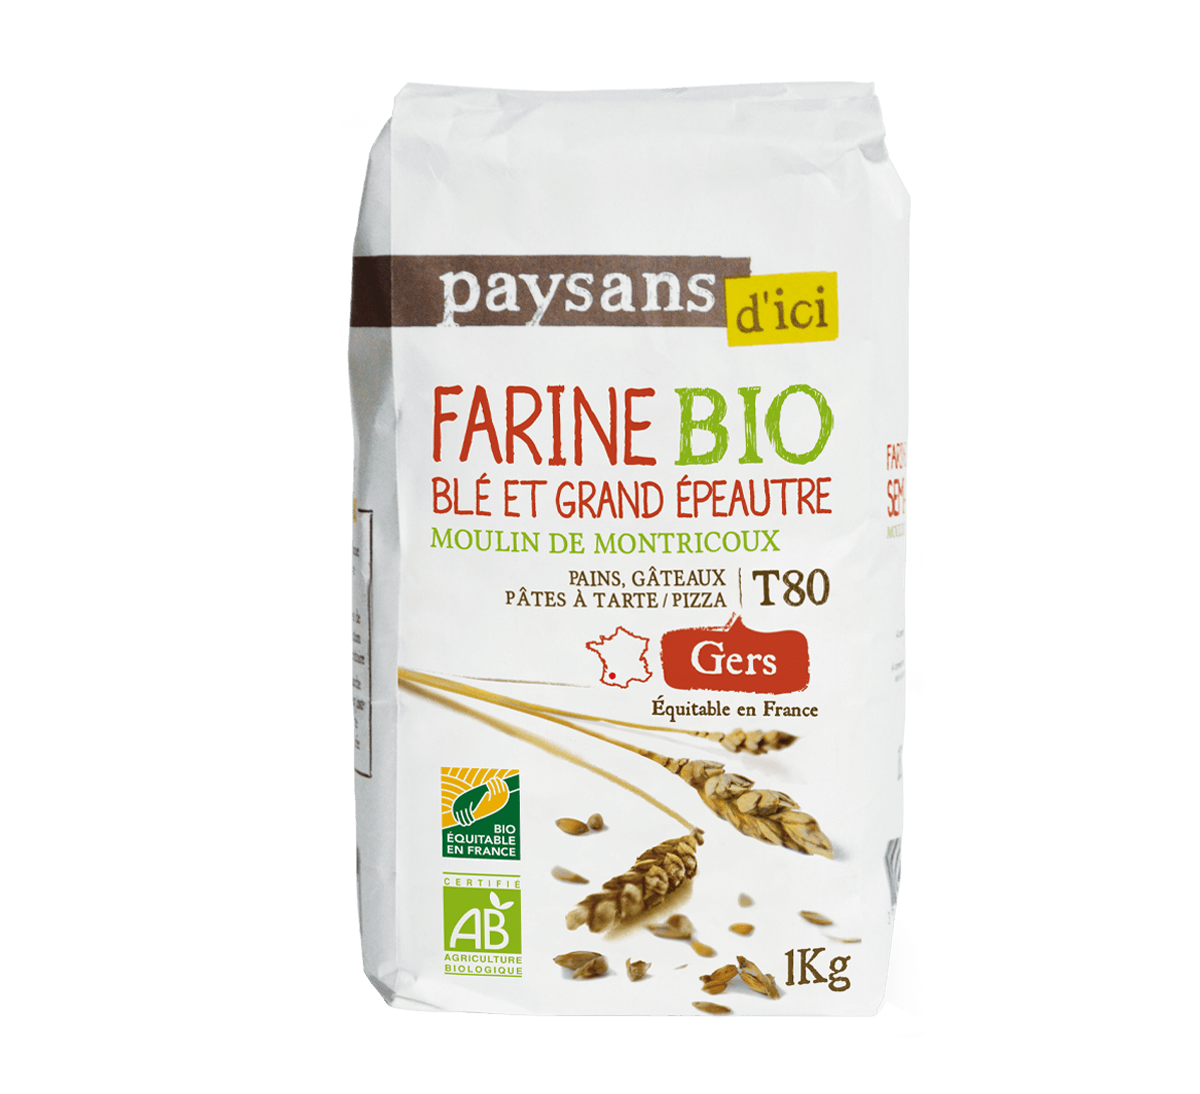 Farine bio de blé semi complète T110 CARREFOUR BIO